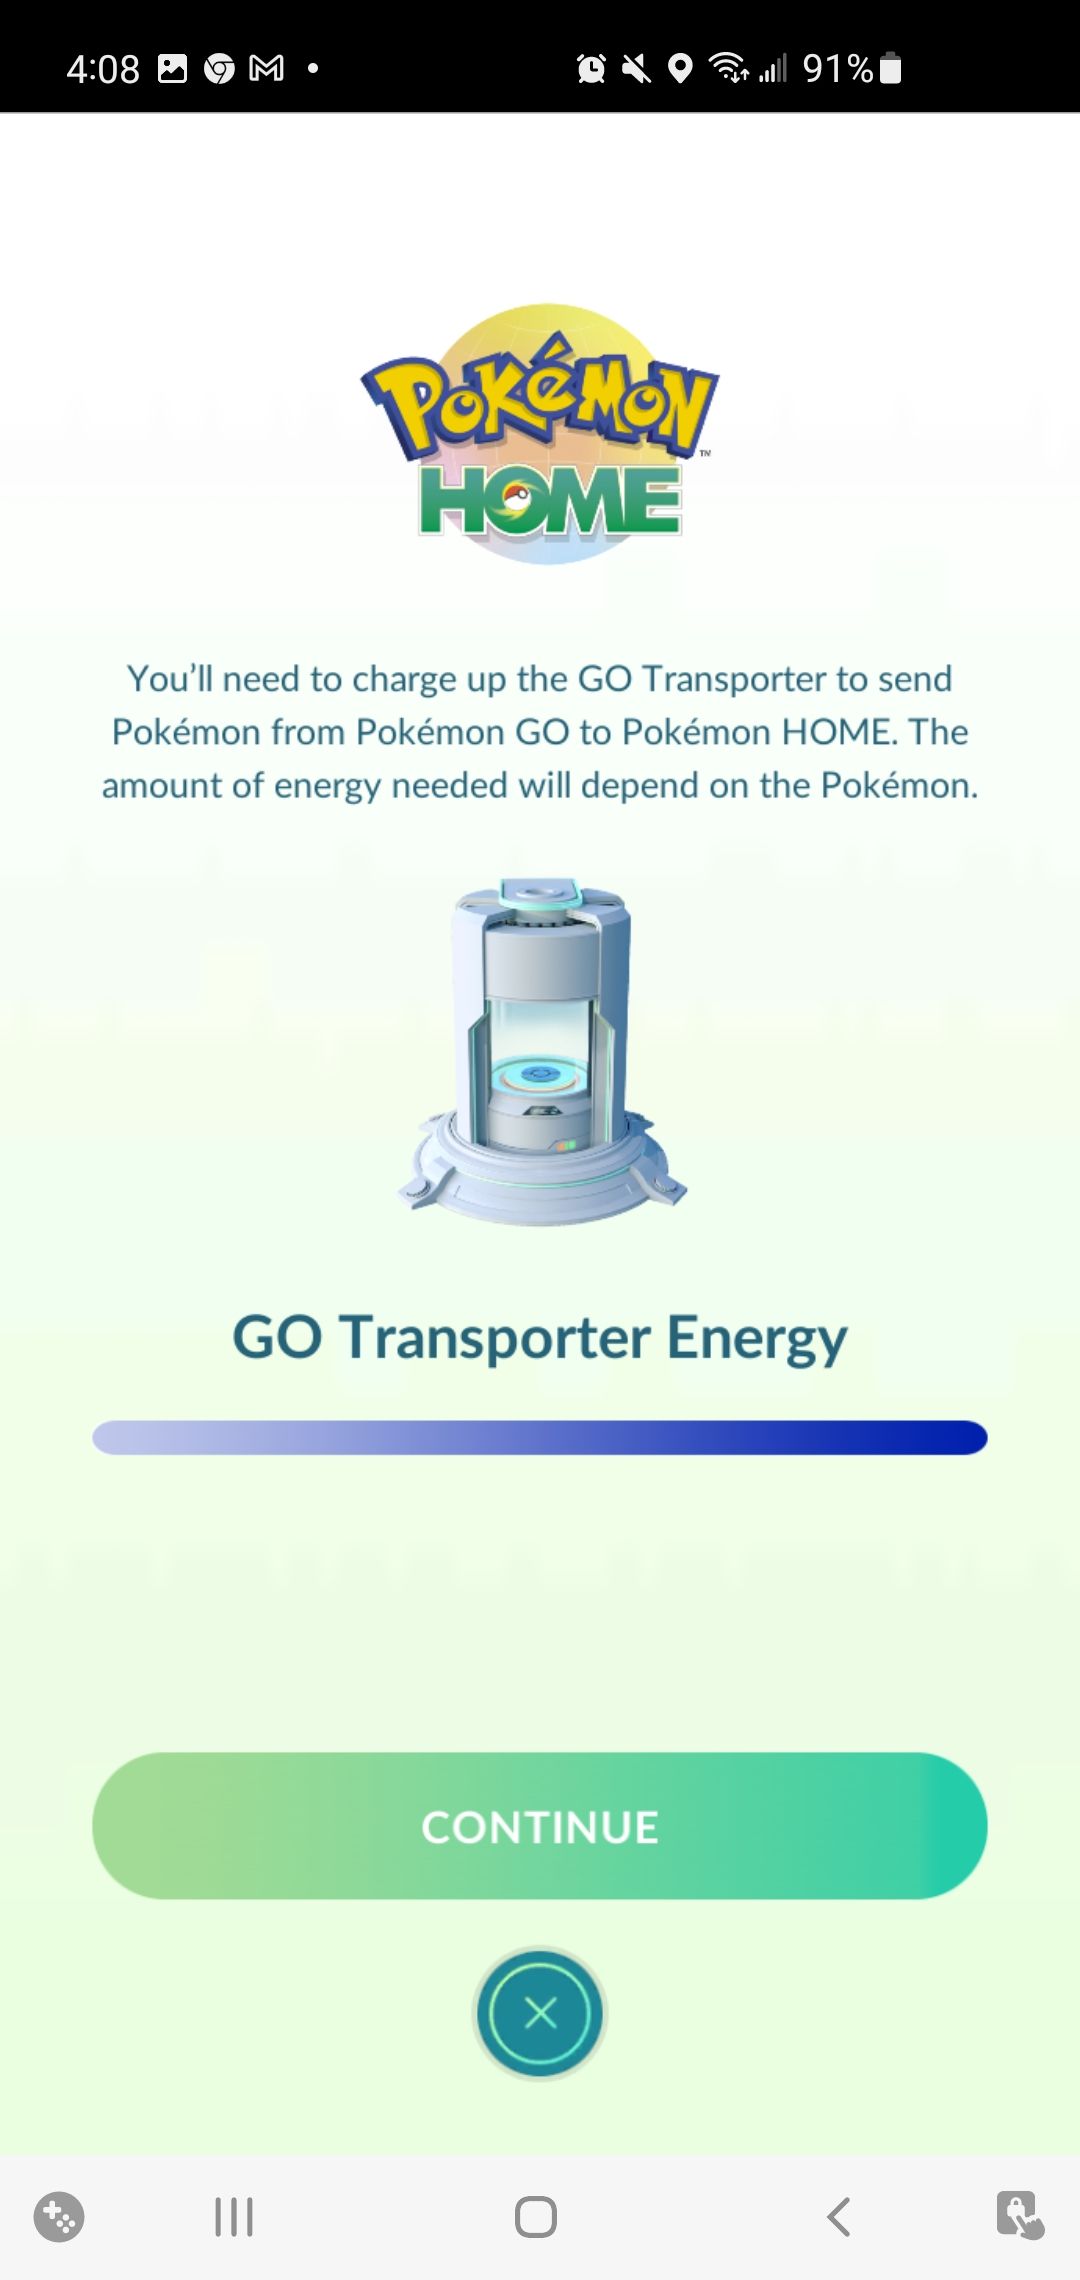 Screenshot of the transfer process for Pokemon Go to Pokemon Home